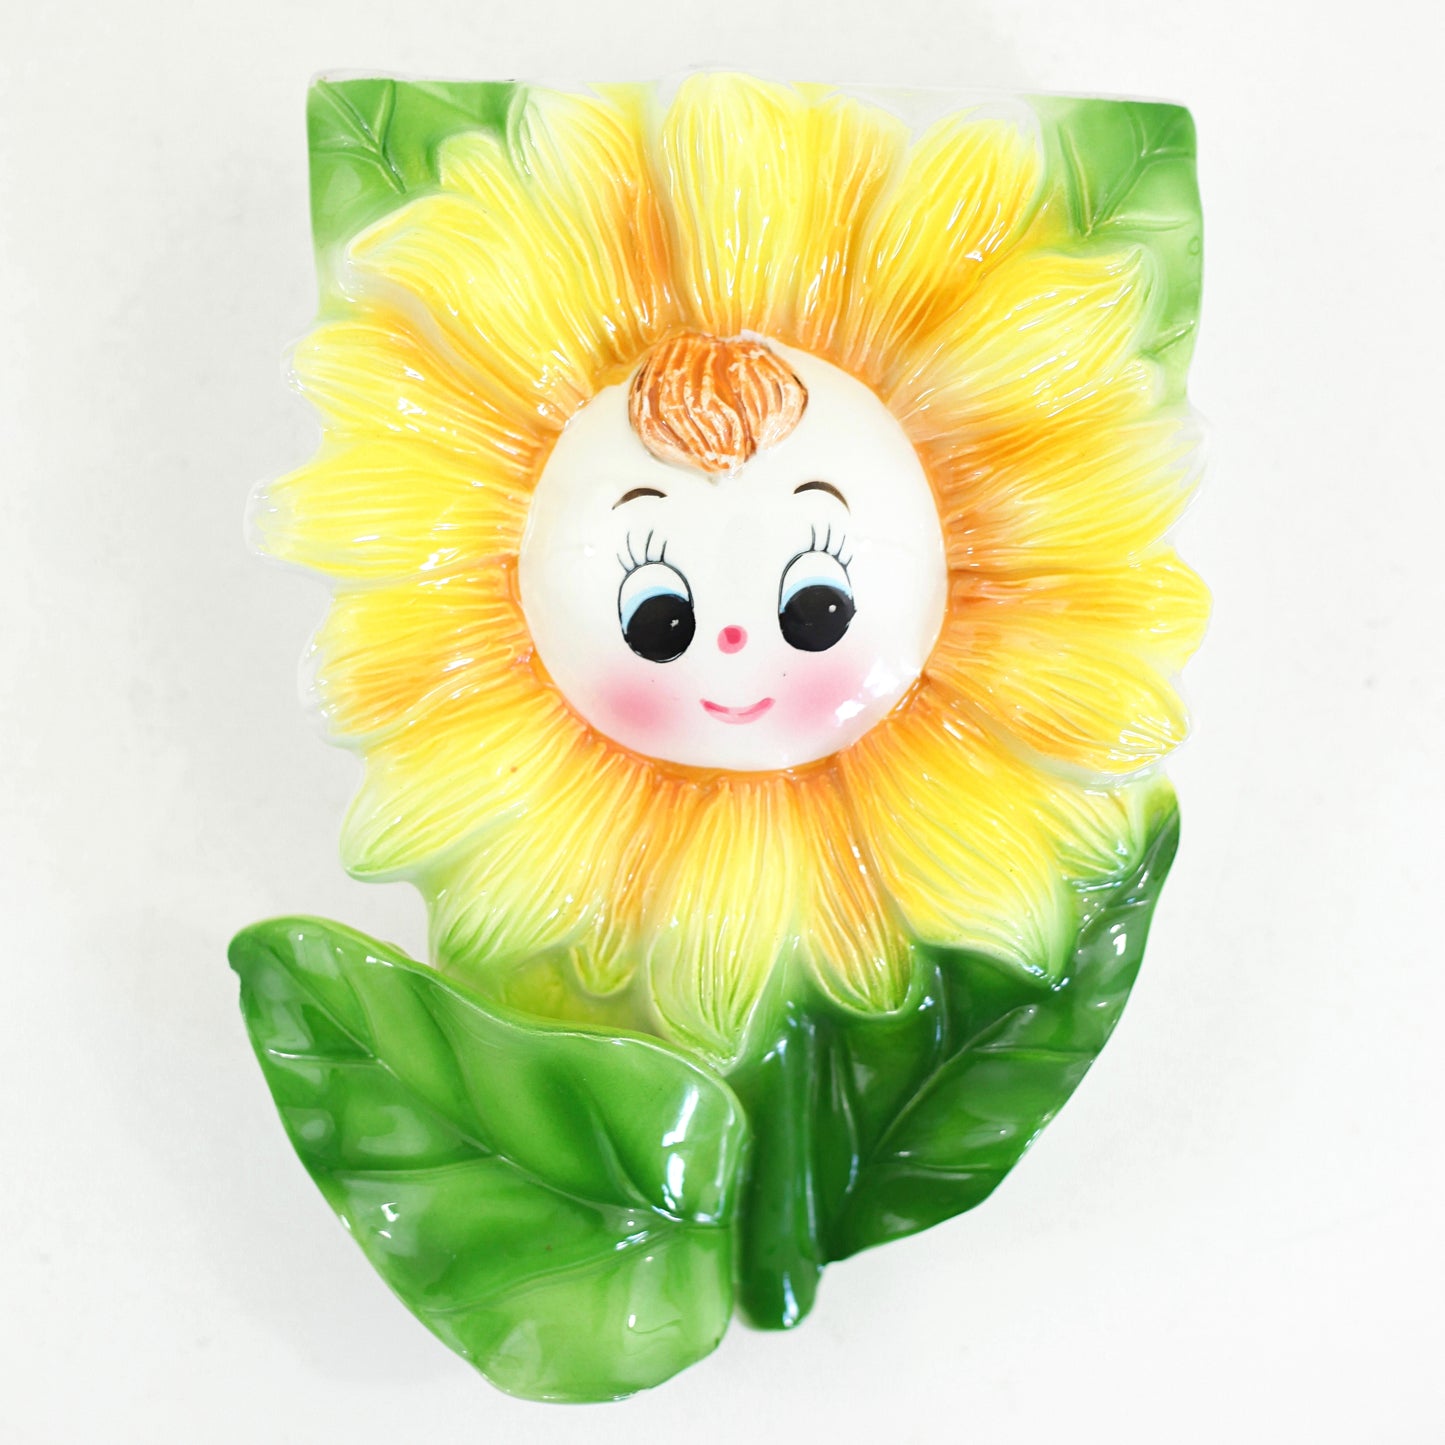 SOLD - Vintage Smiling Sunflower Wall Pocket from Japan